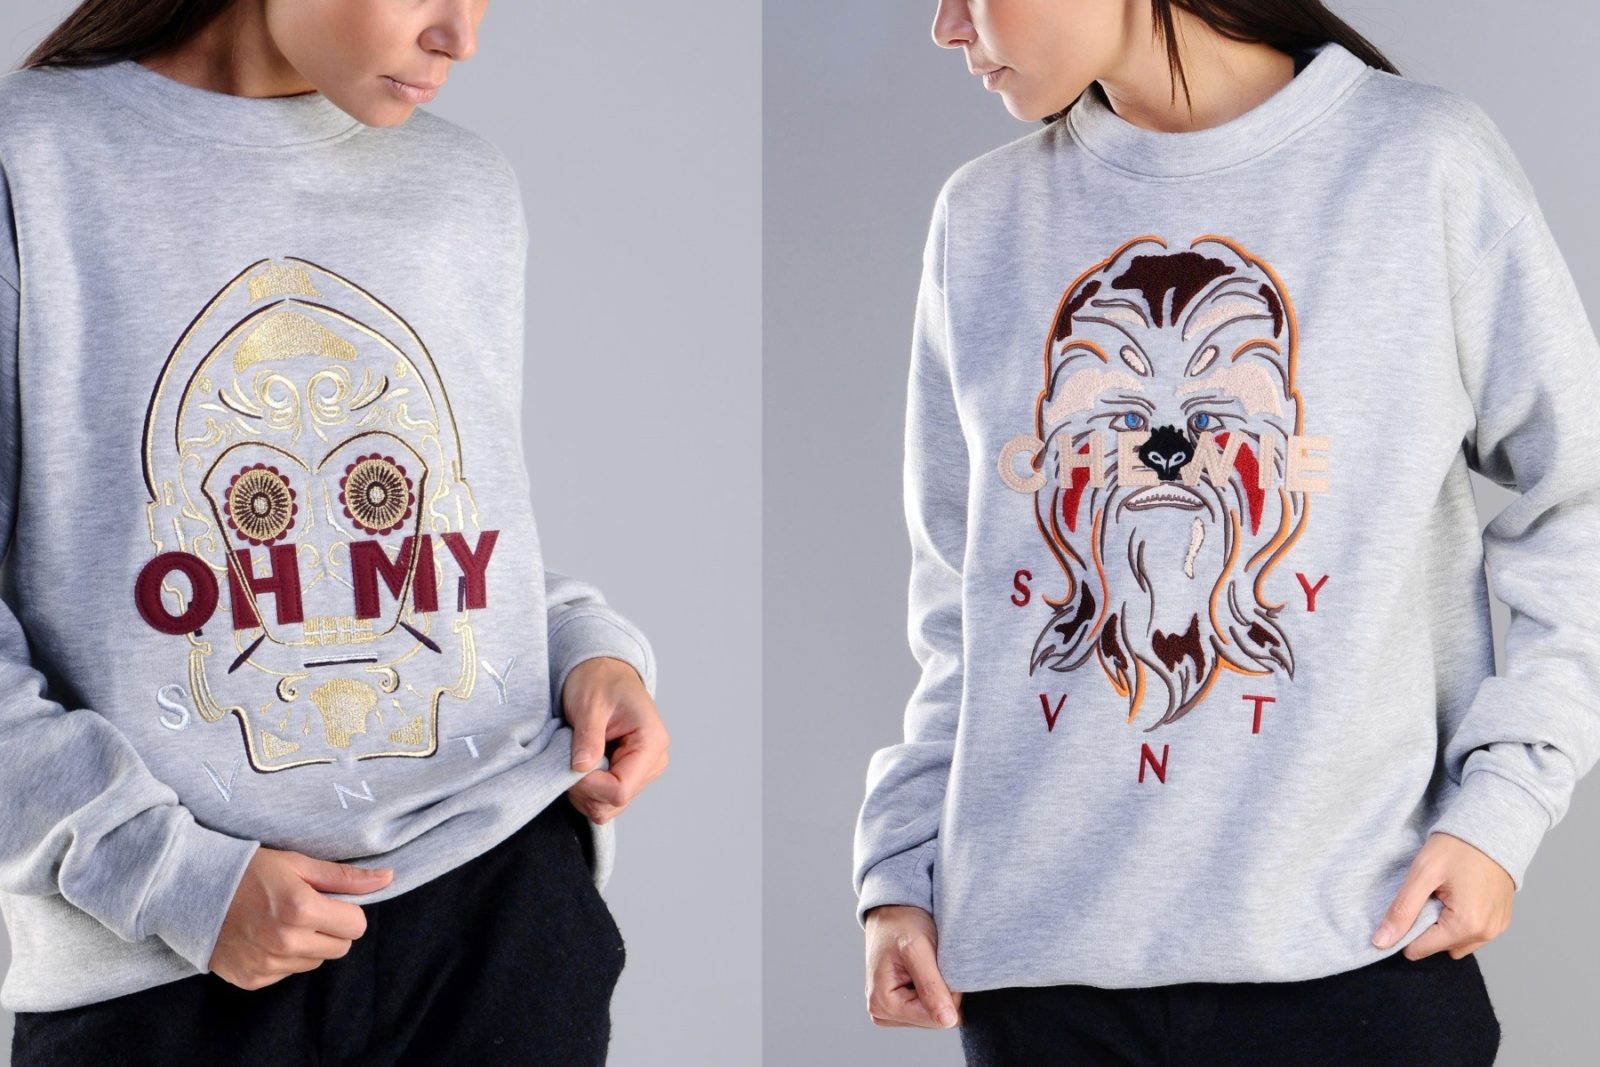 SVNTY x Star Wars sweatshirts at Yoox